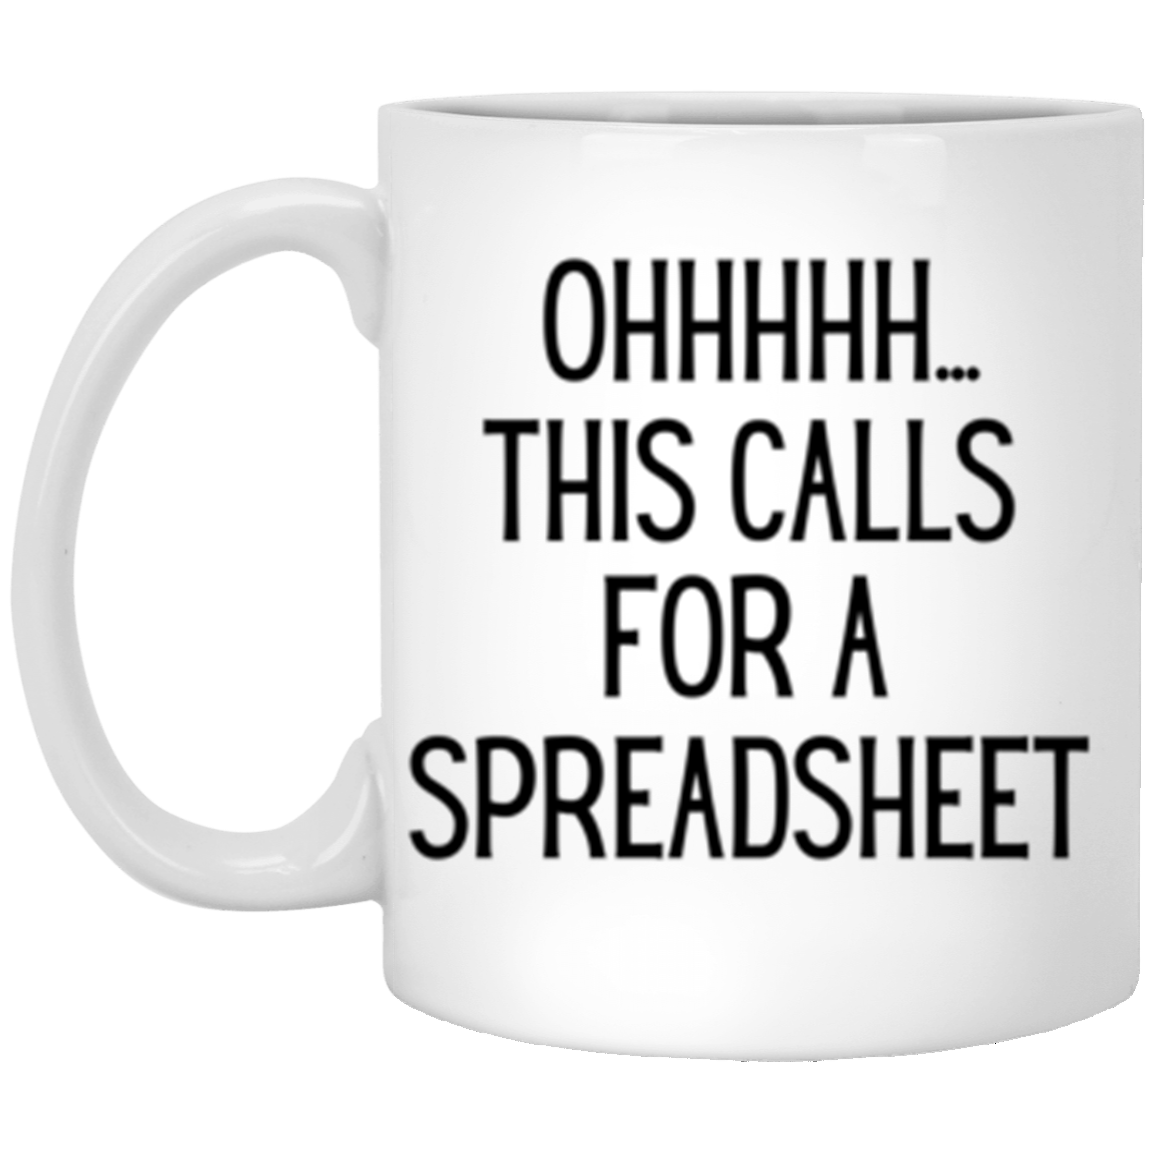 Spreadsheet 11oz White Mug